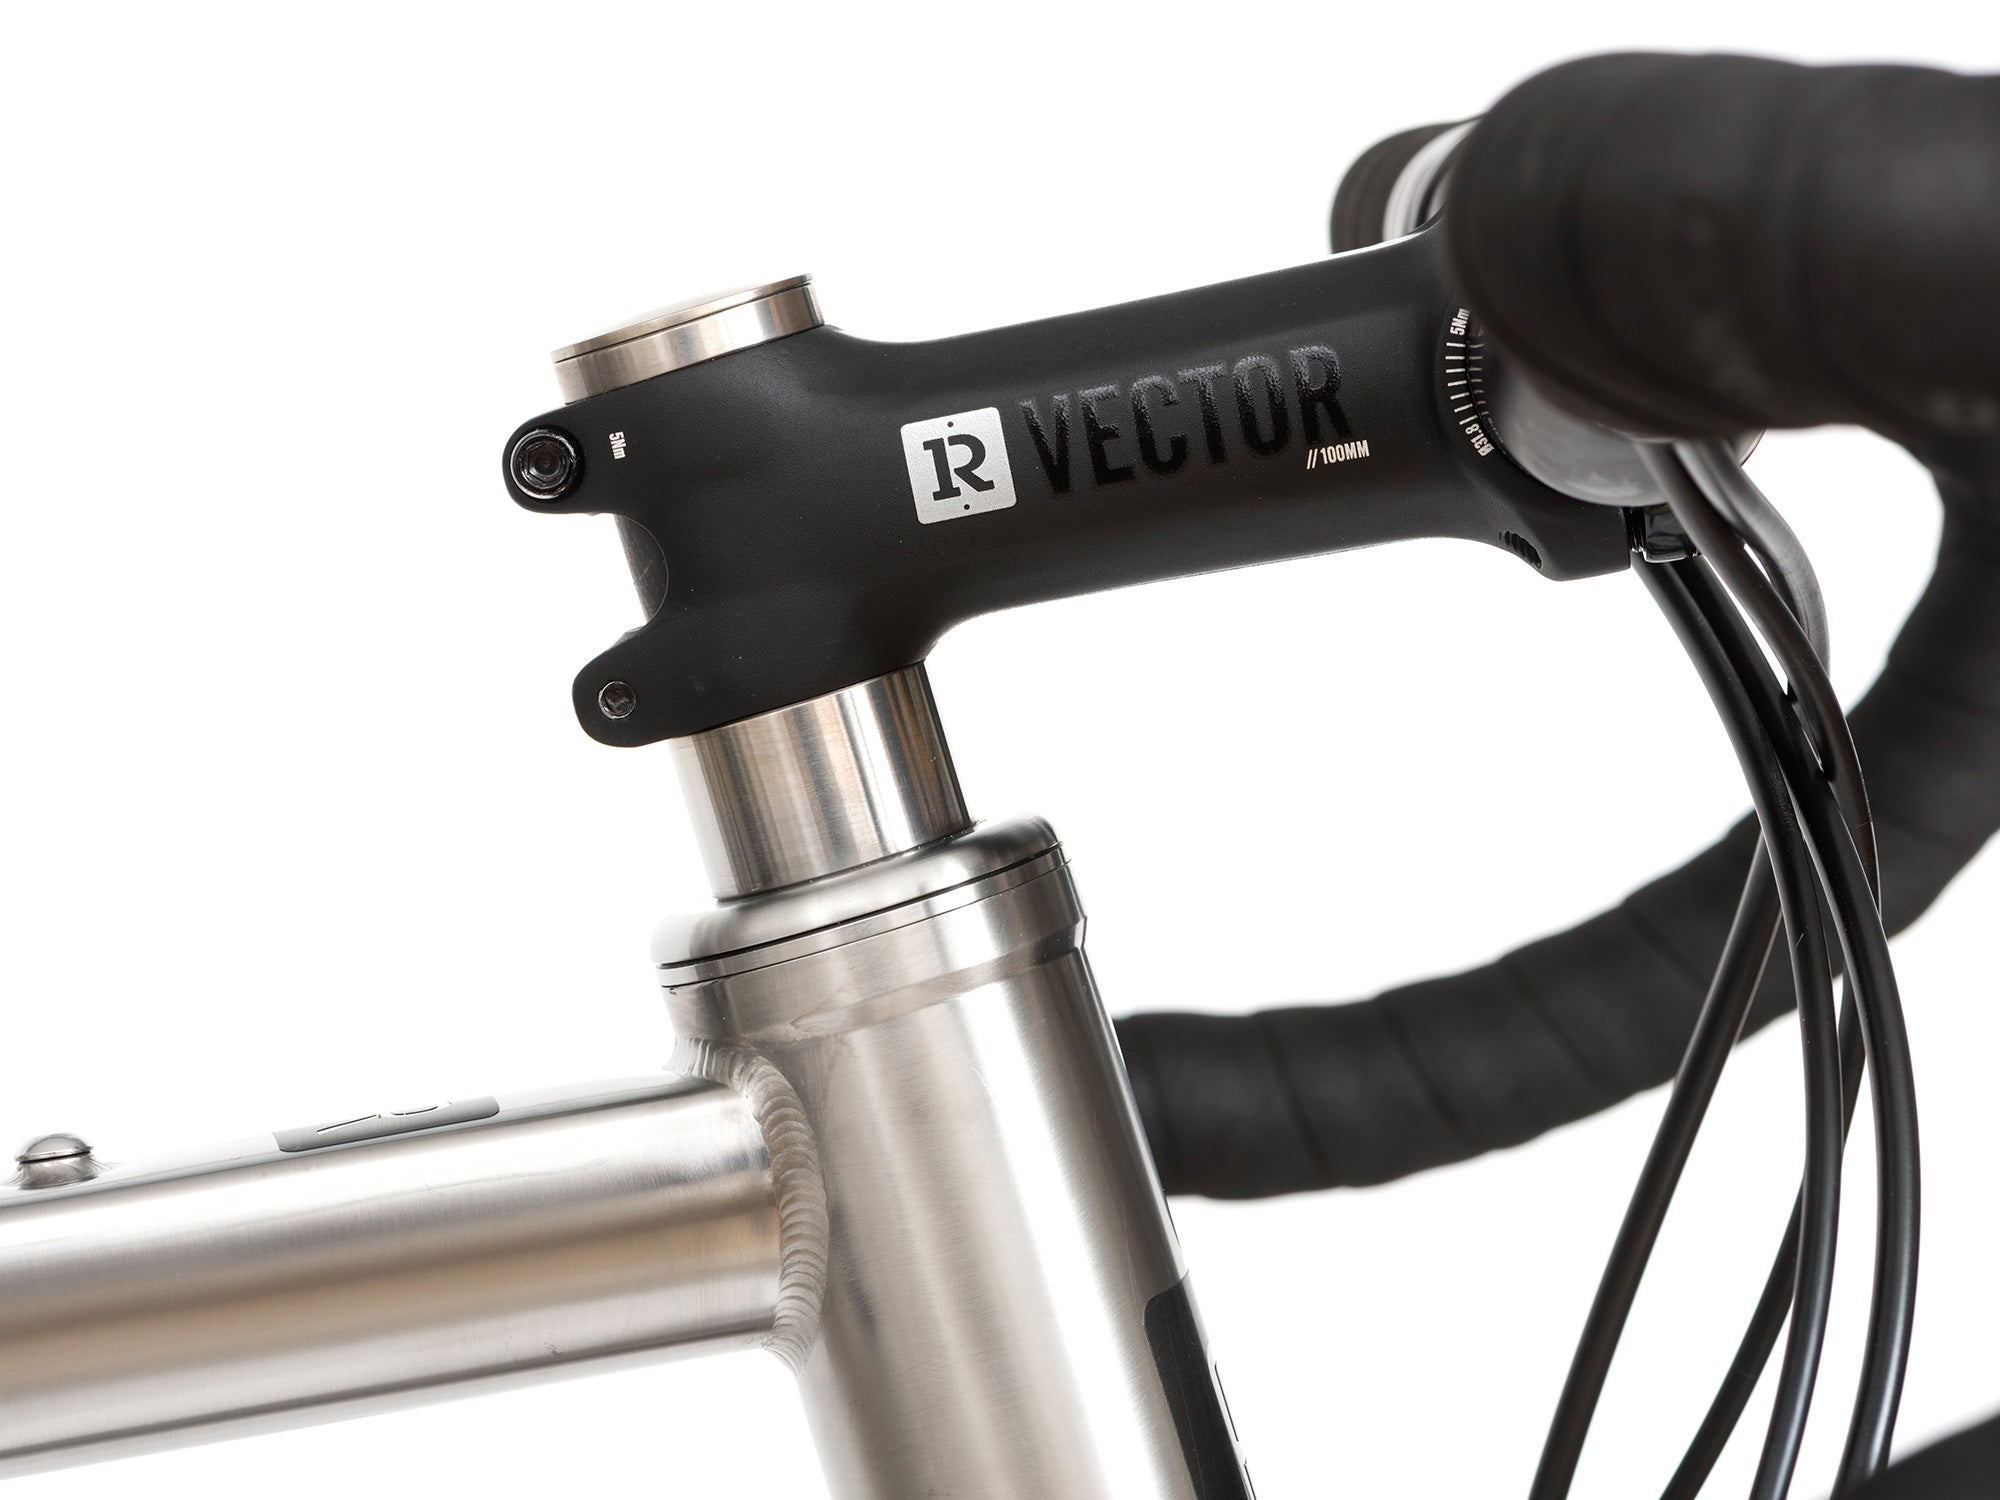 Reillly Titanium headset shown on a bike. 